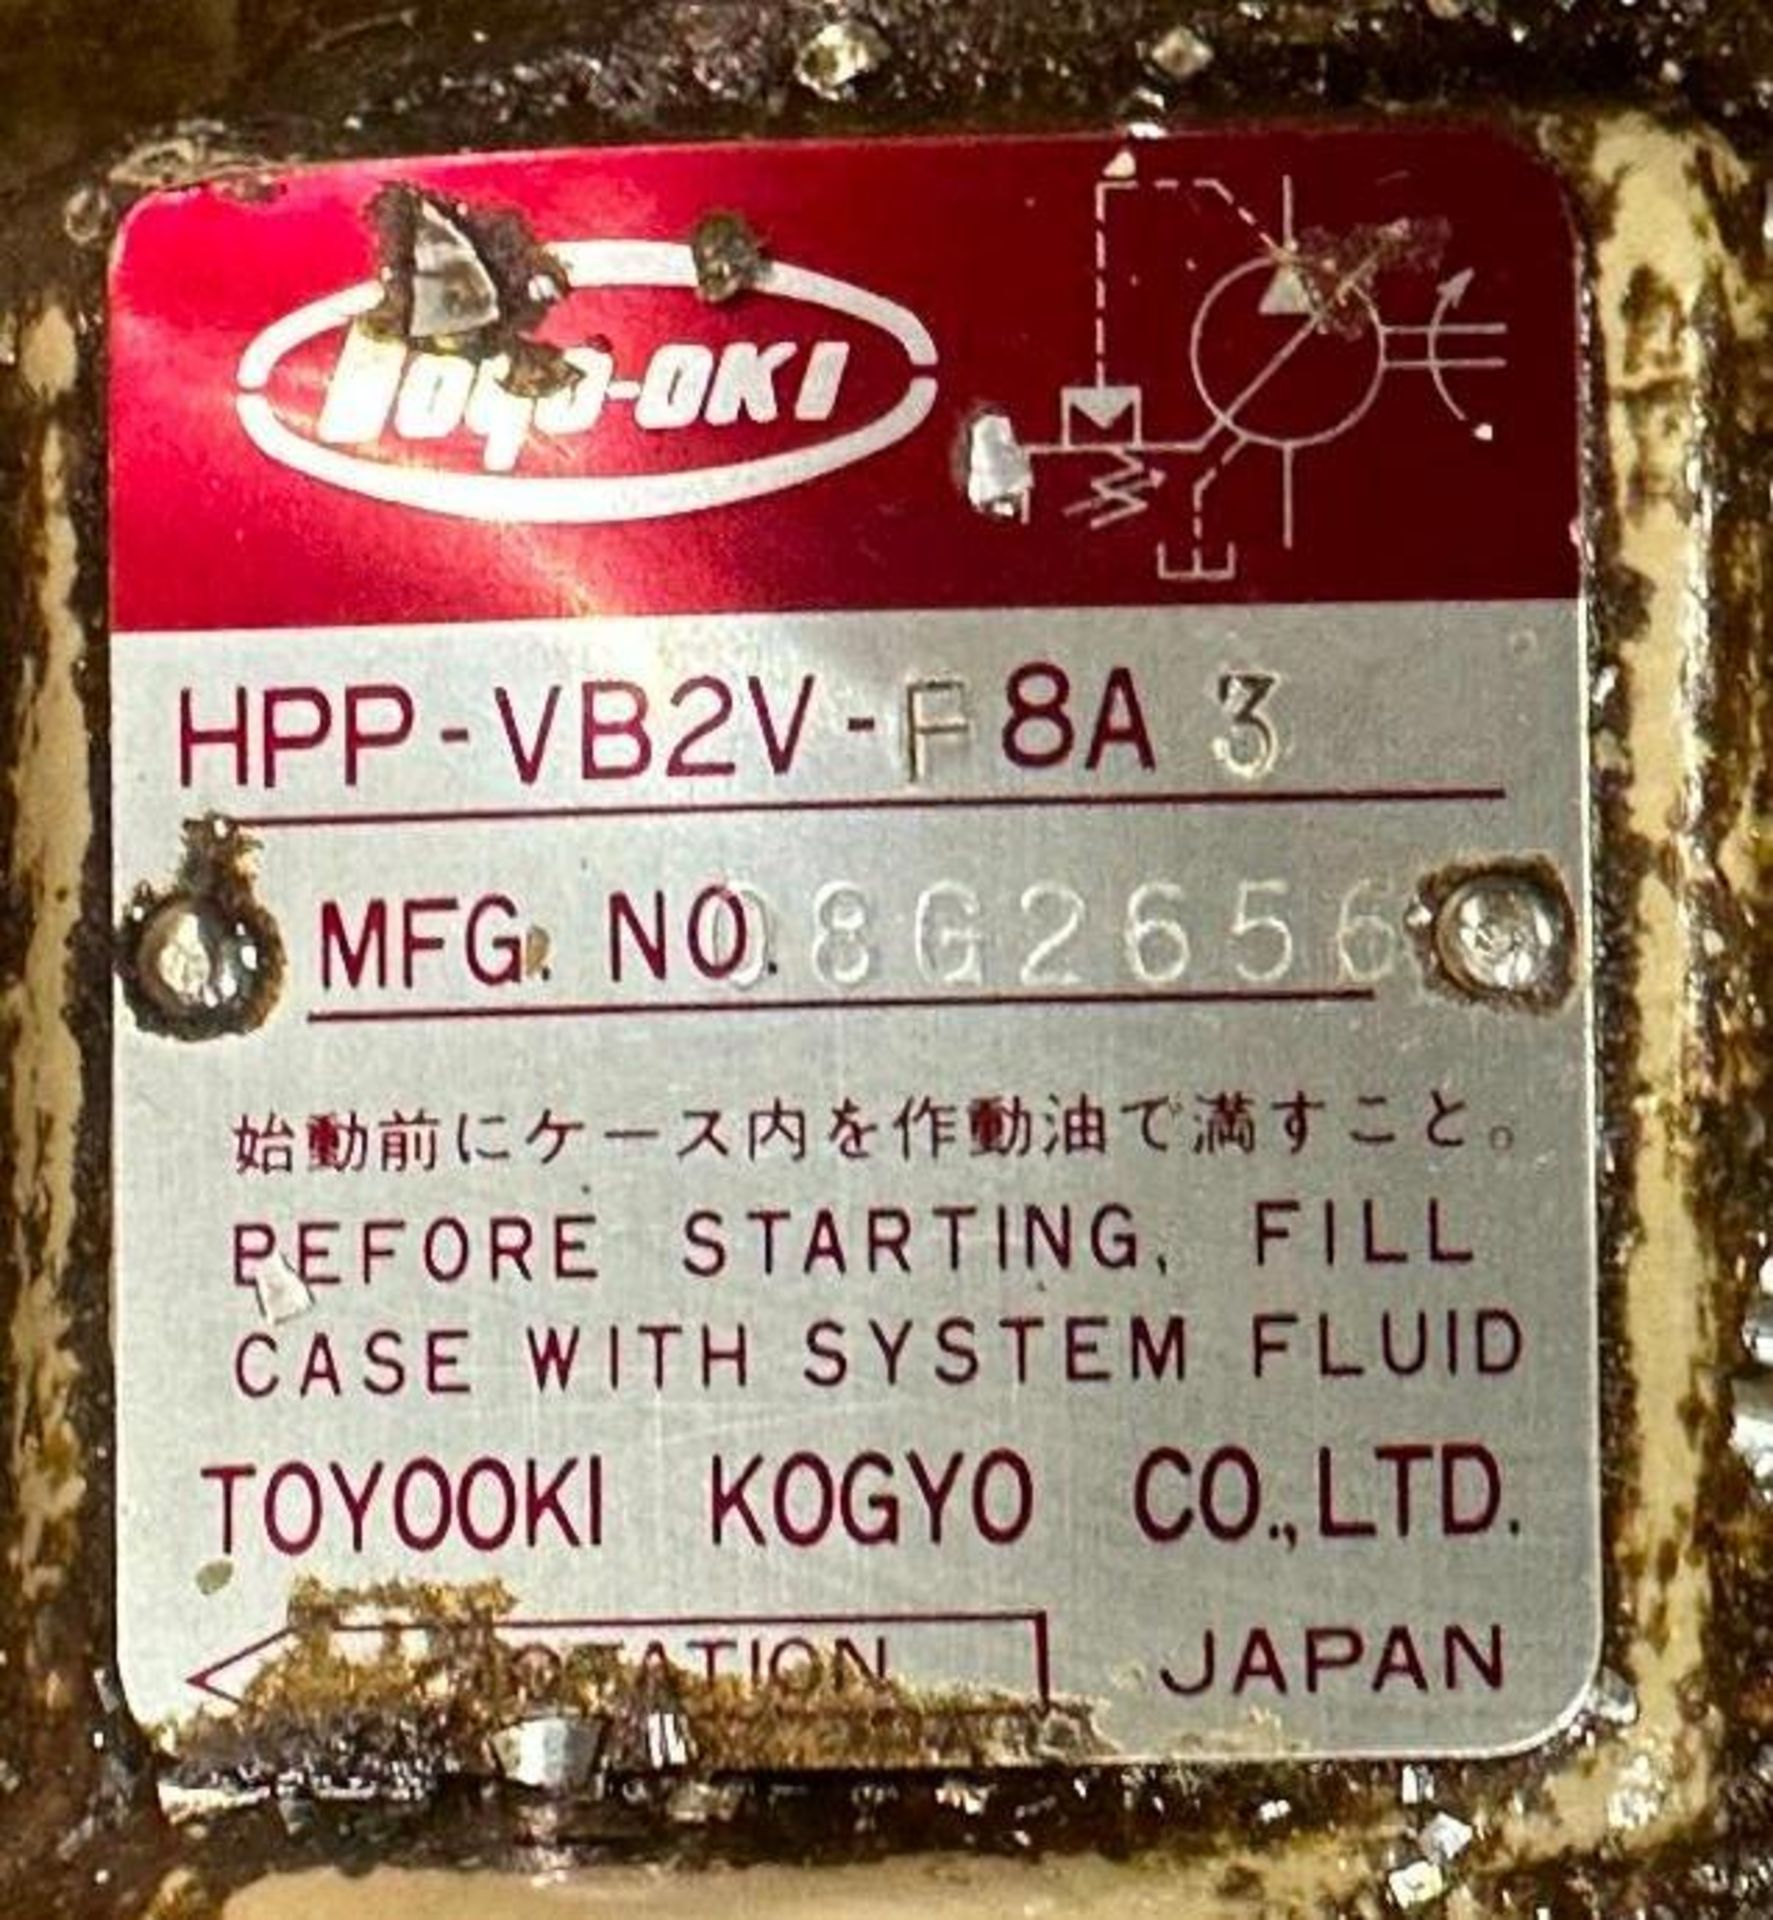 TOYO-OKI #HPP-VB2V-F8A3 Hydraulic Piston Pump - Image 7 of 7